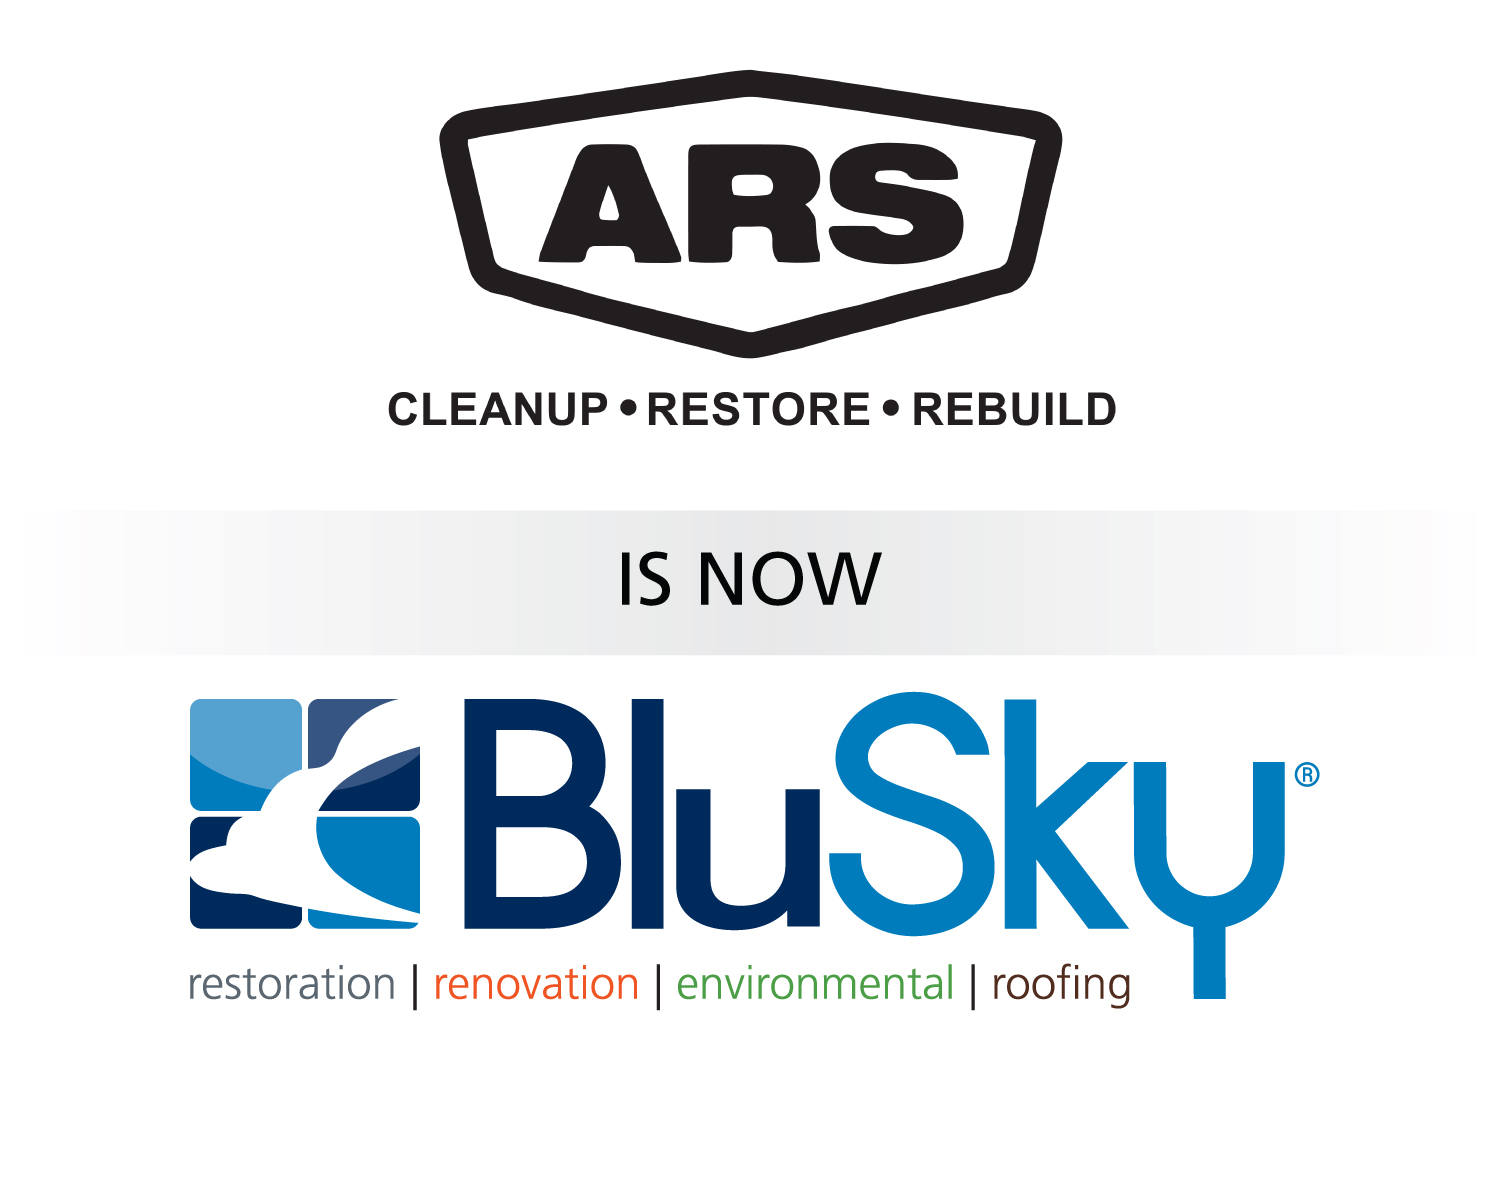 BluSky Restoration Contractors Announces Merger with Utah-based ARS Cleanup – Restore – Rebuild